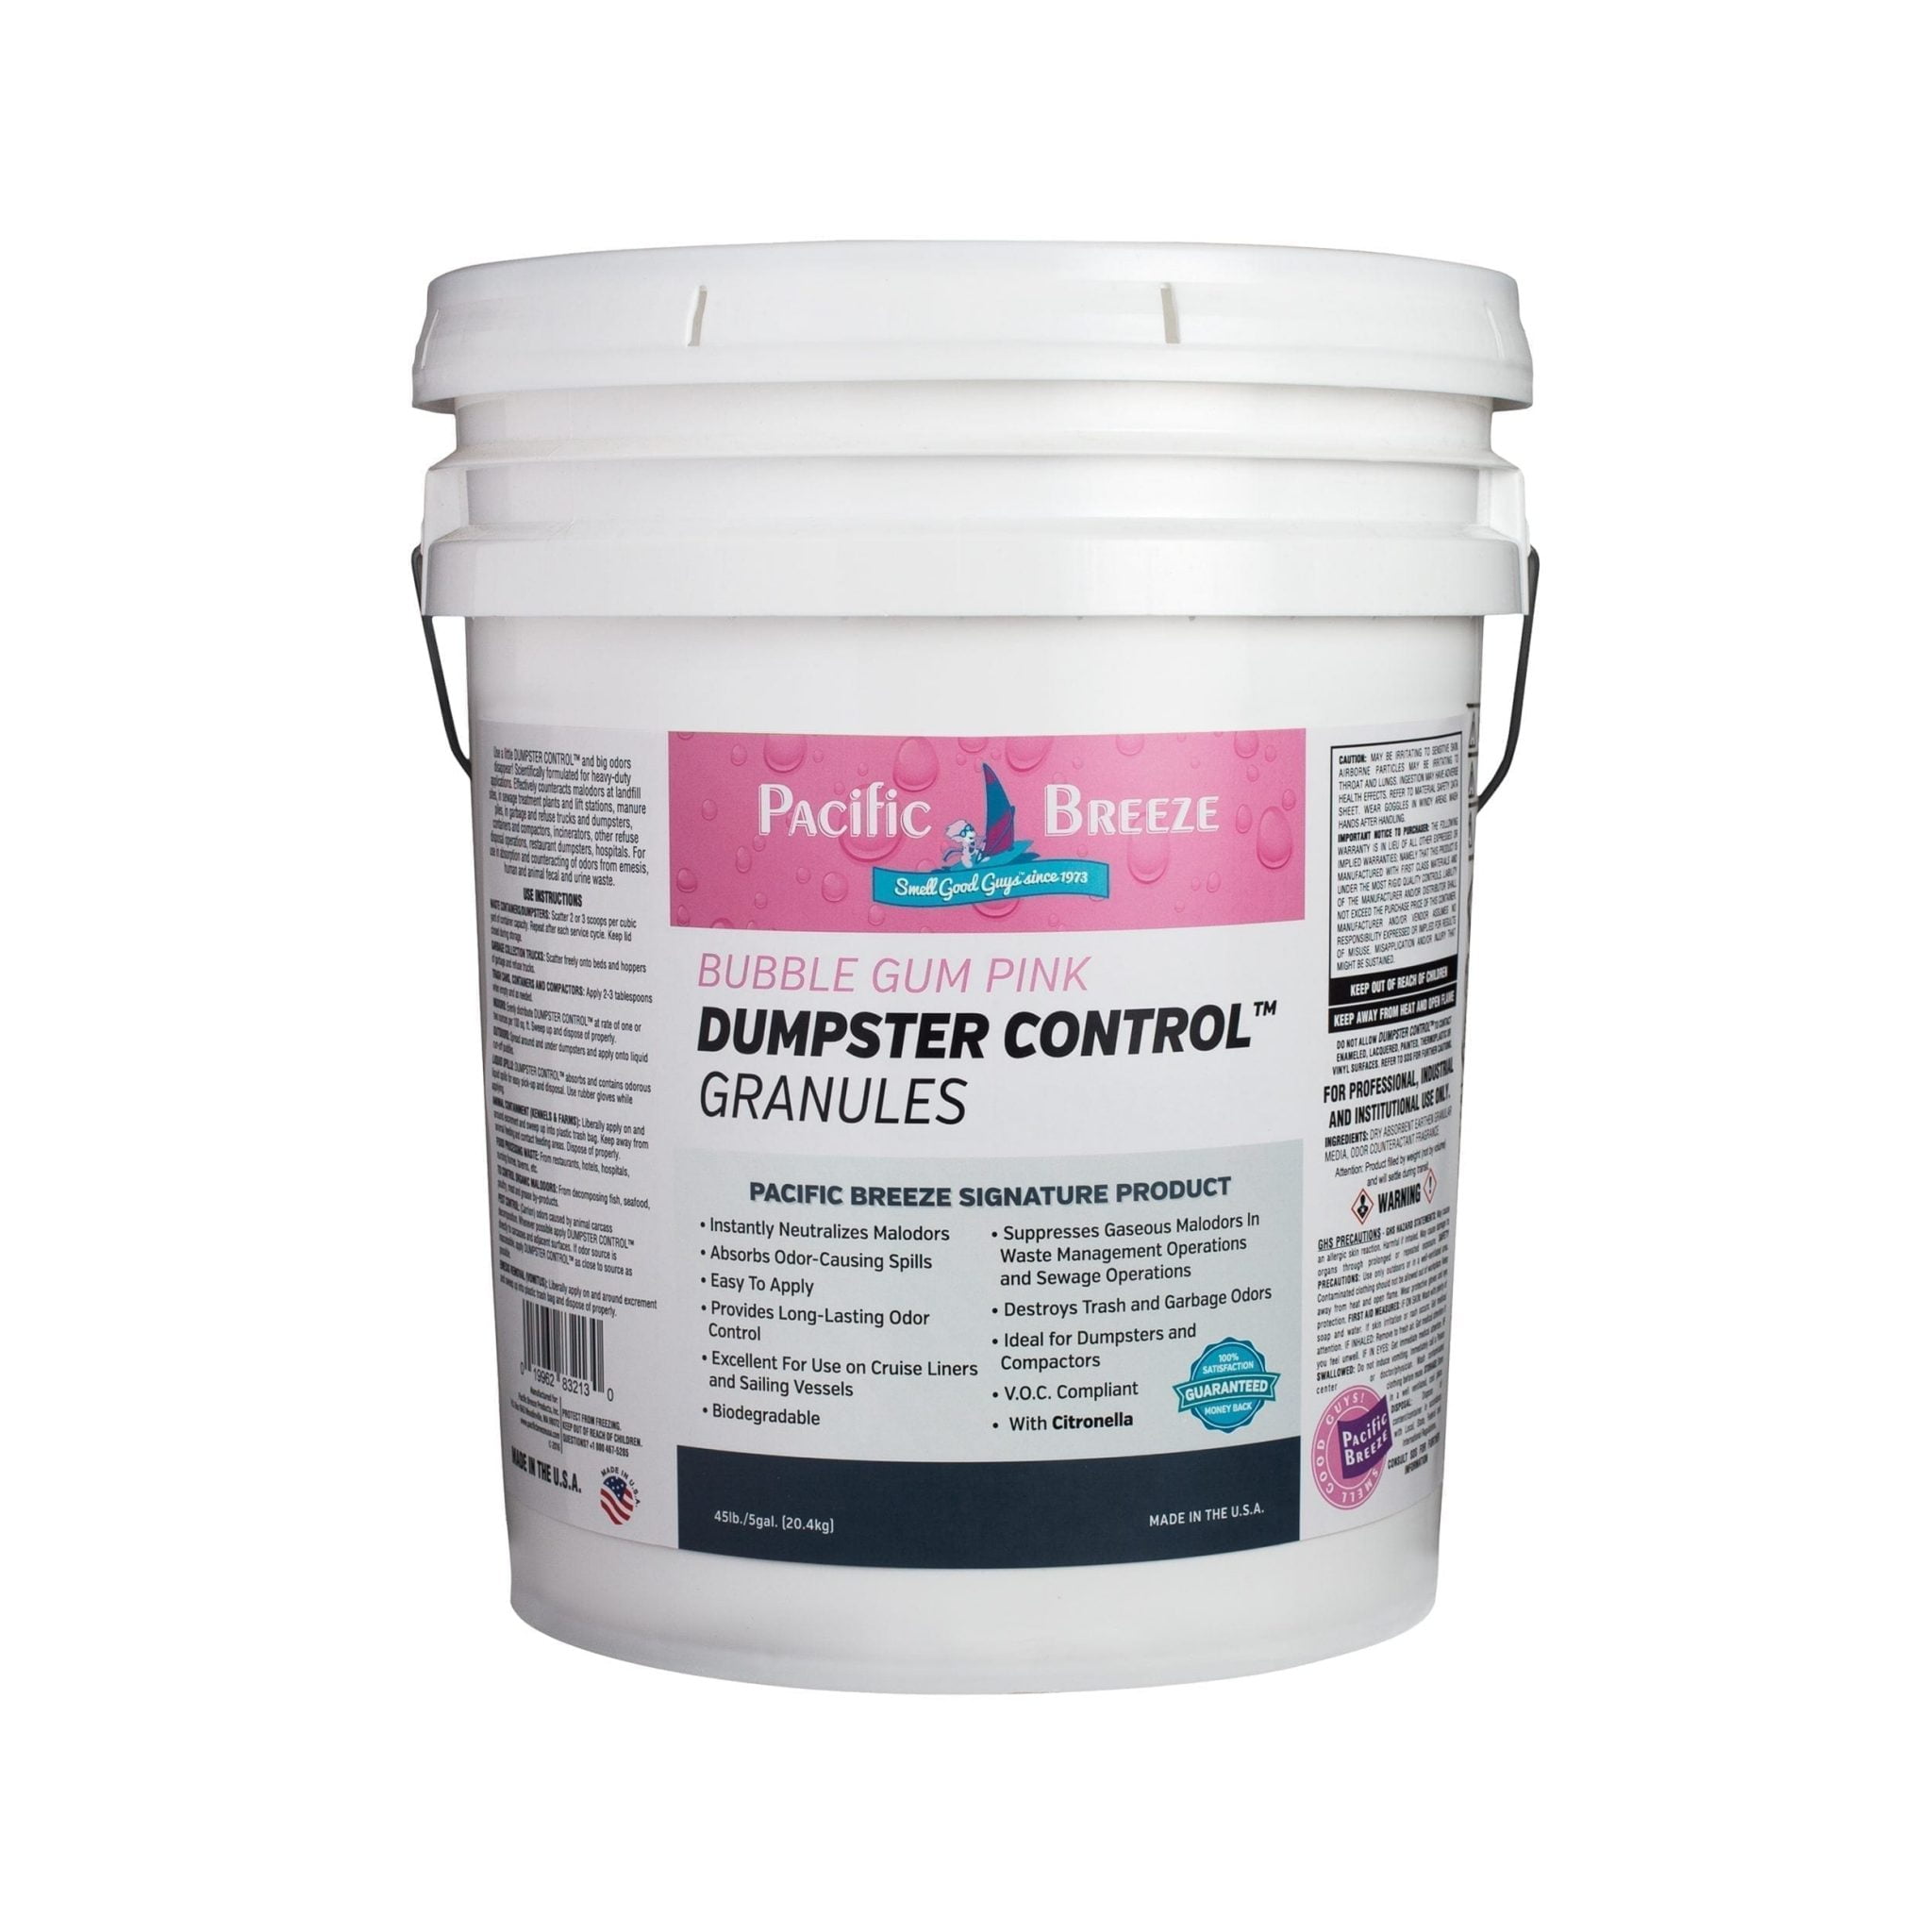 Bubble Gum Pink Dumpster Control Granules with Citronella - 5 Gallon Bucket